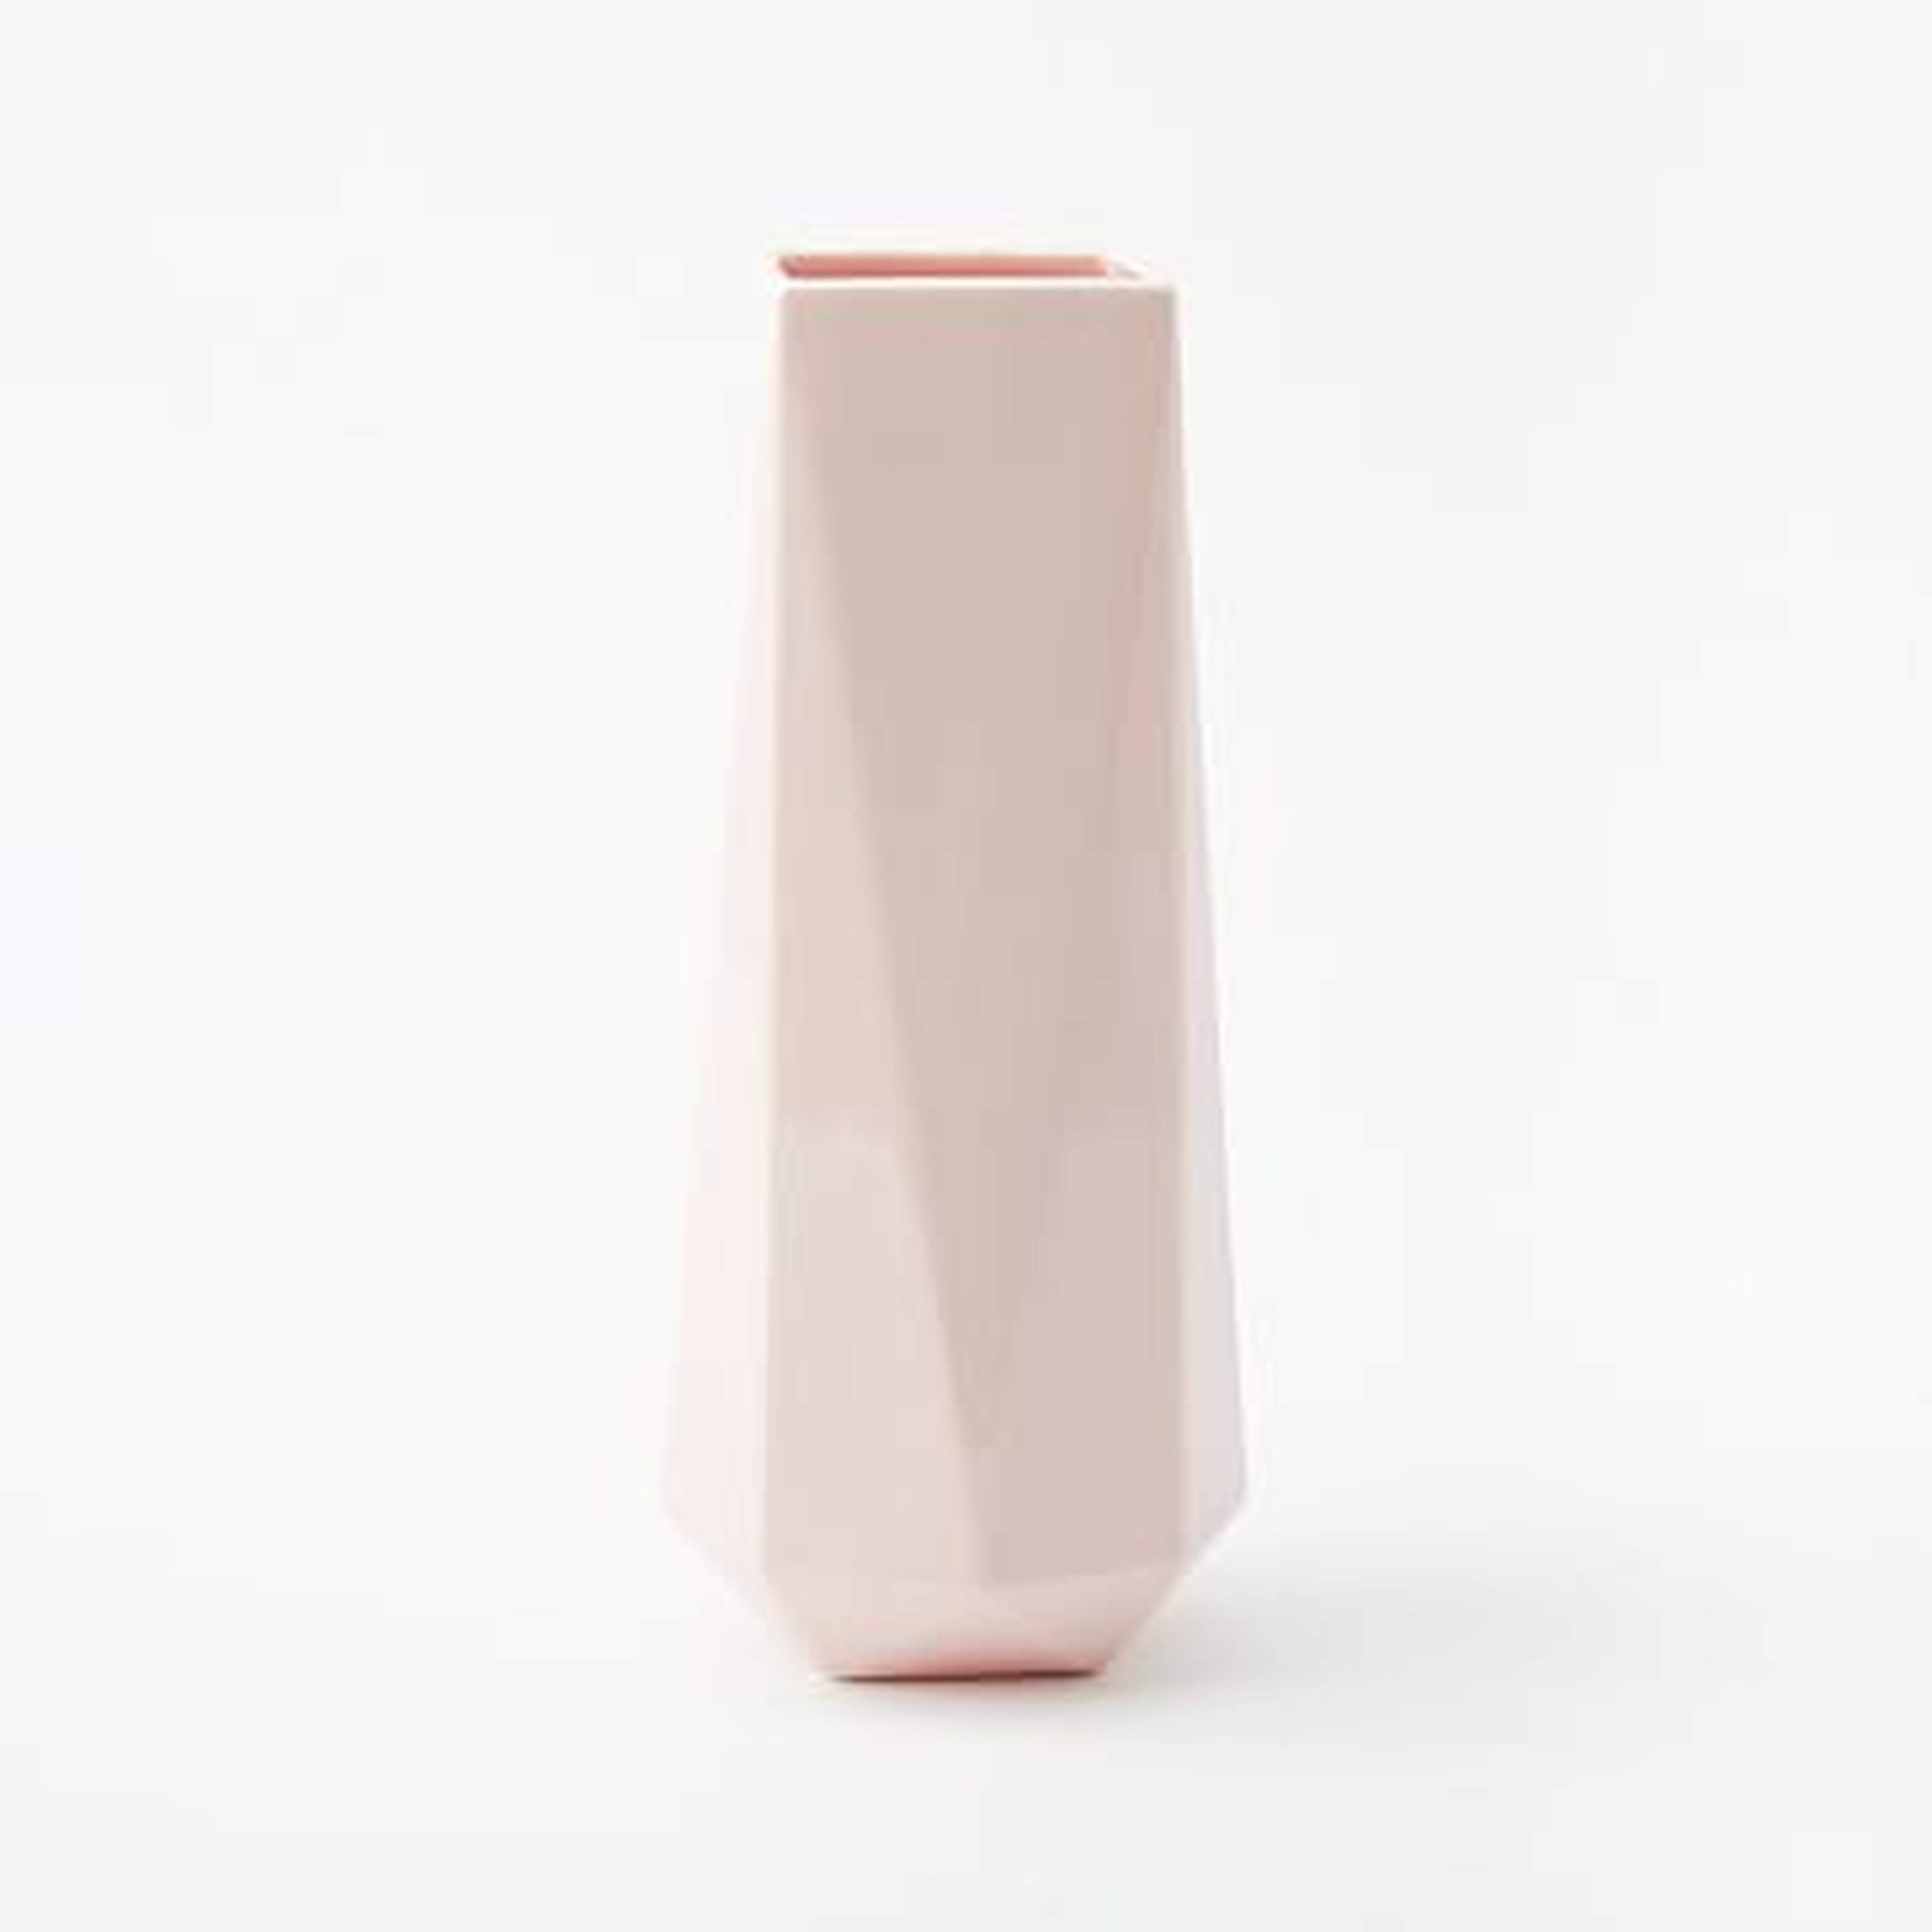 Faceted Porcelain Vase, 12", Dusty Blush - West Elm